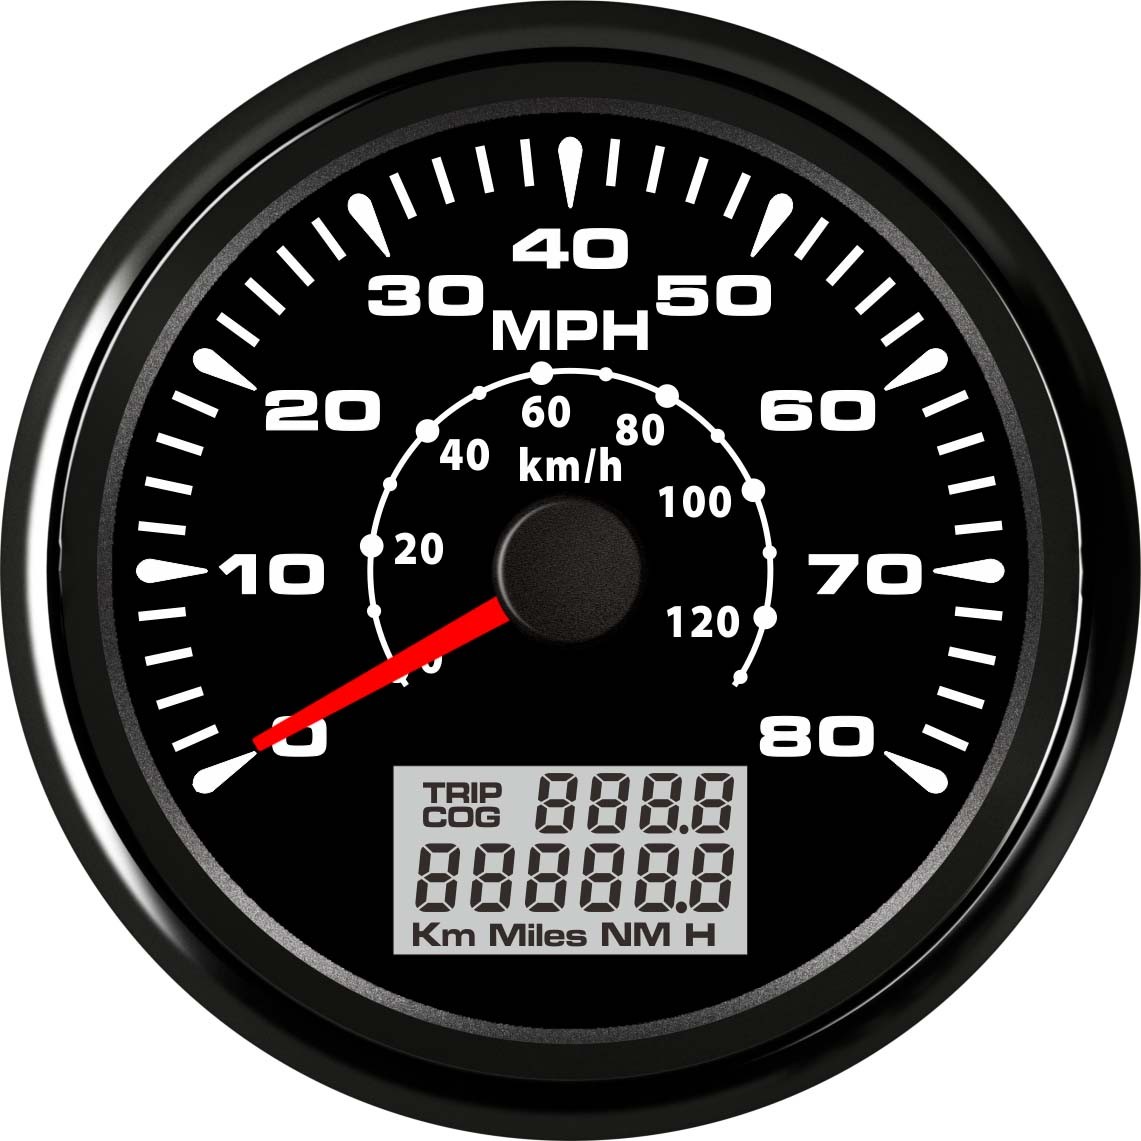 ELING ECH GPS Speedometer(80MPH)